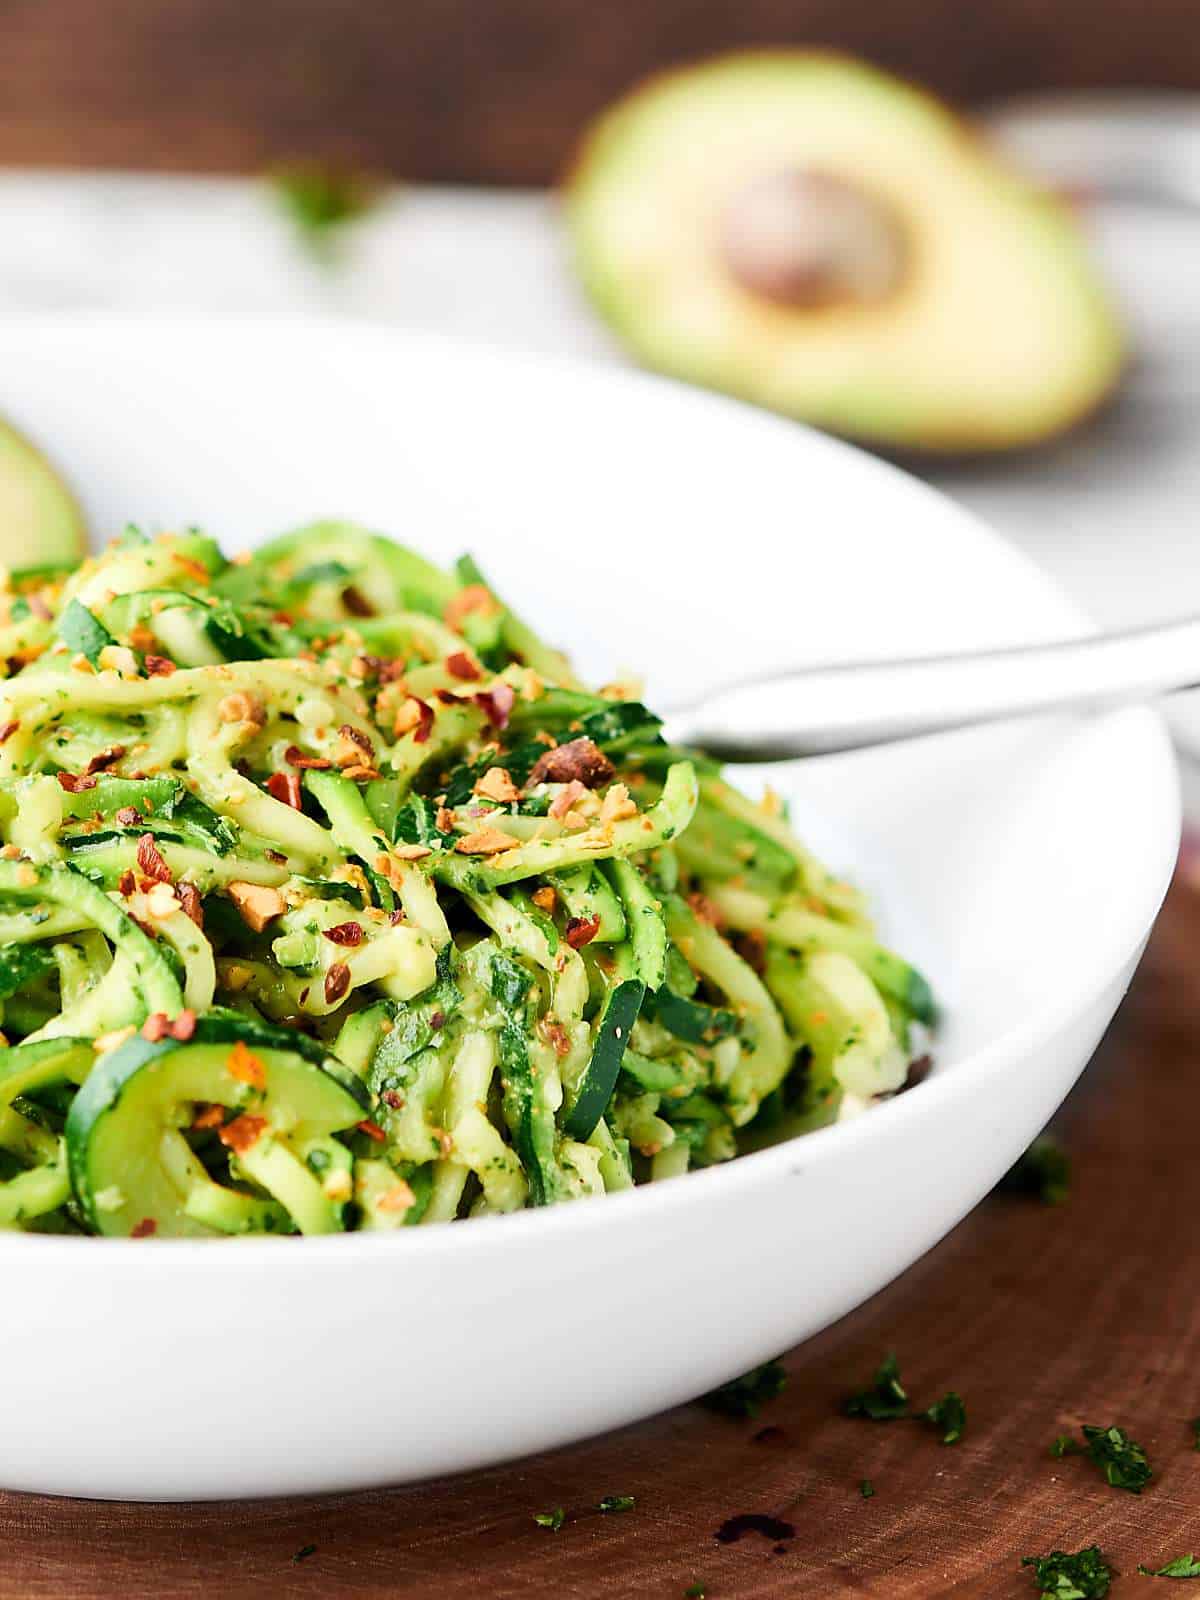 Avocado Pesto Recipe - Vegan, Gluten Free, and Oil Free!